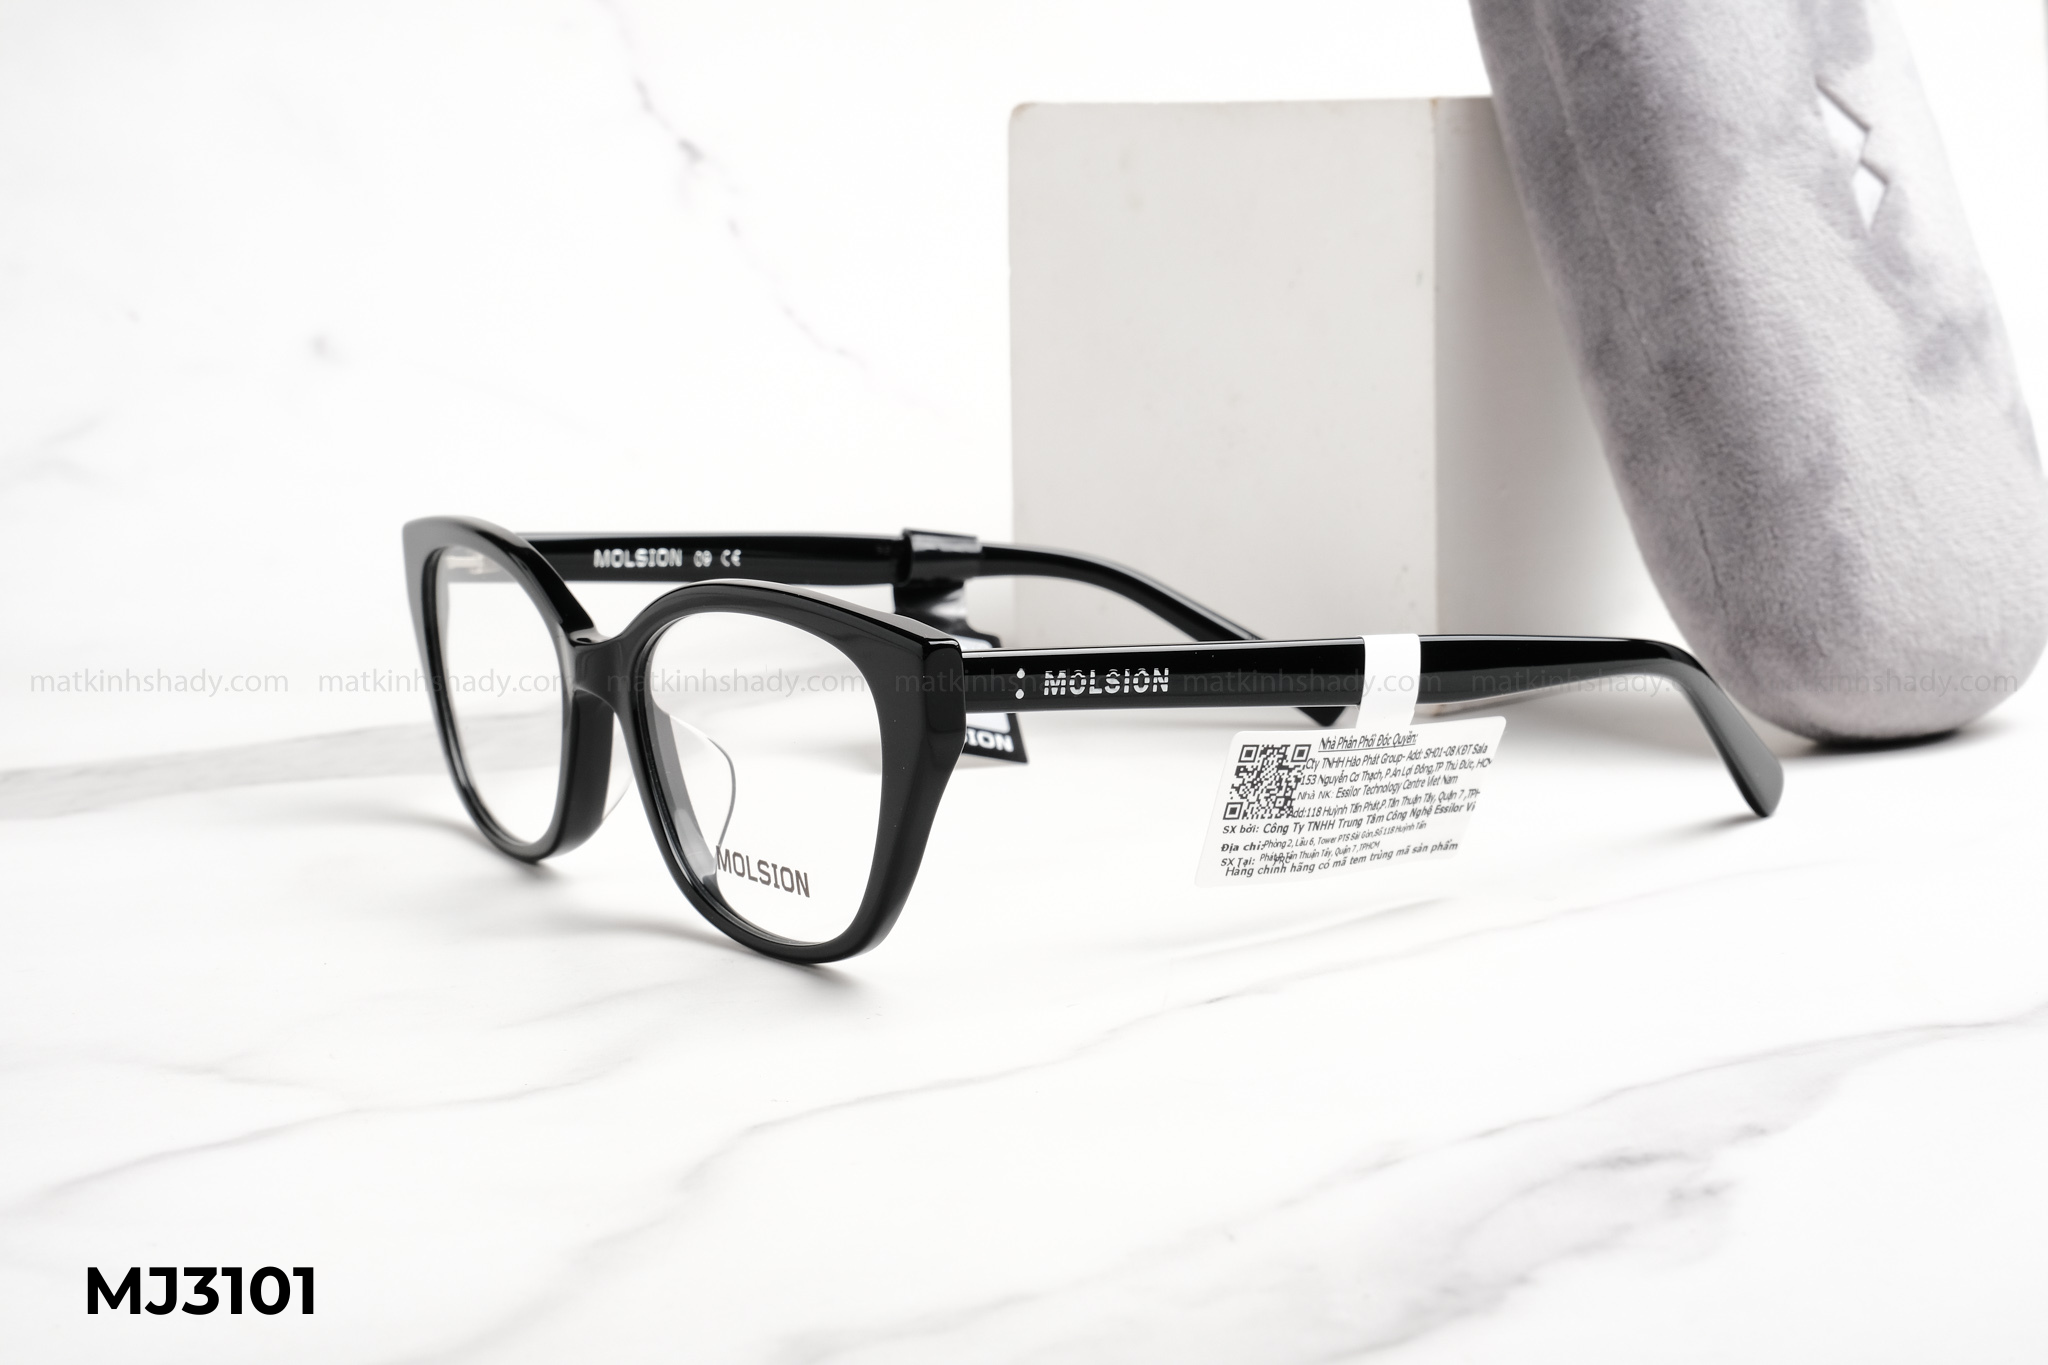  Molsion Eyewear - Glasses - MJ3101 